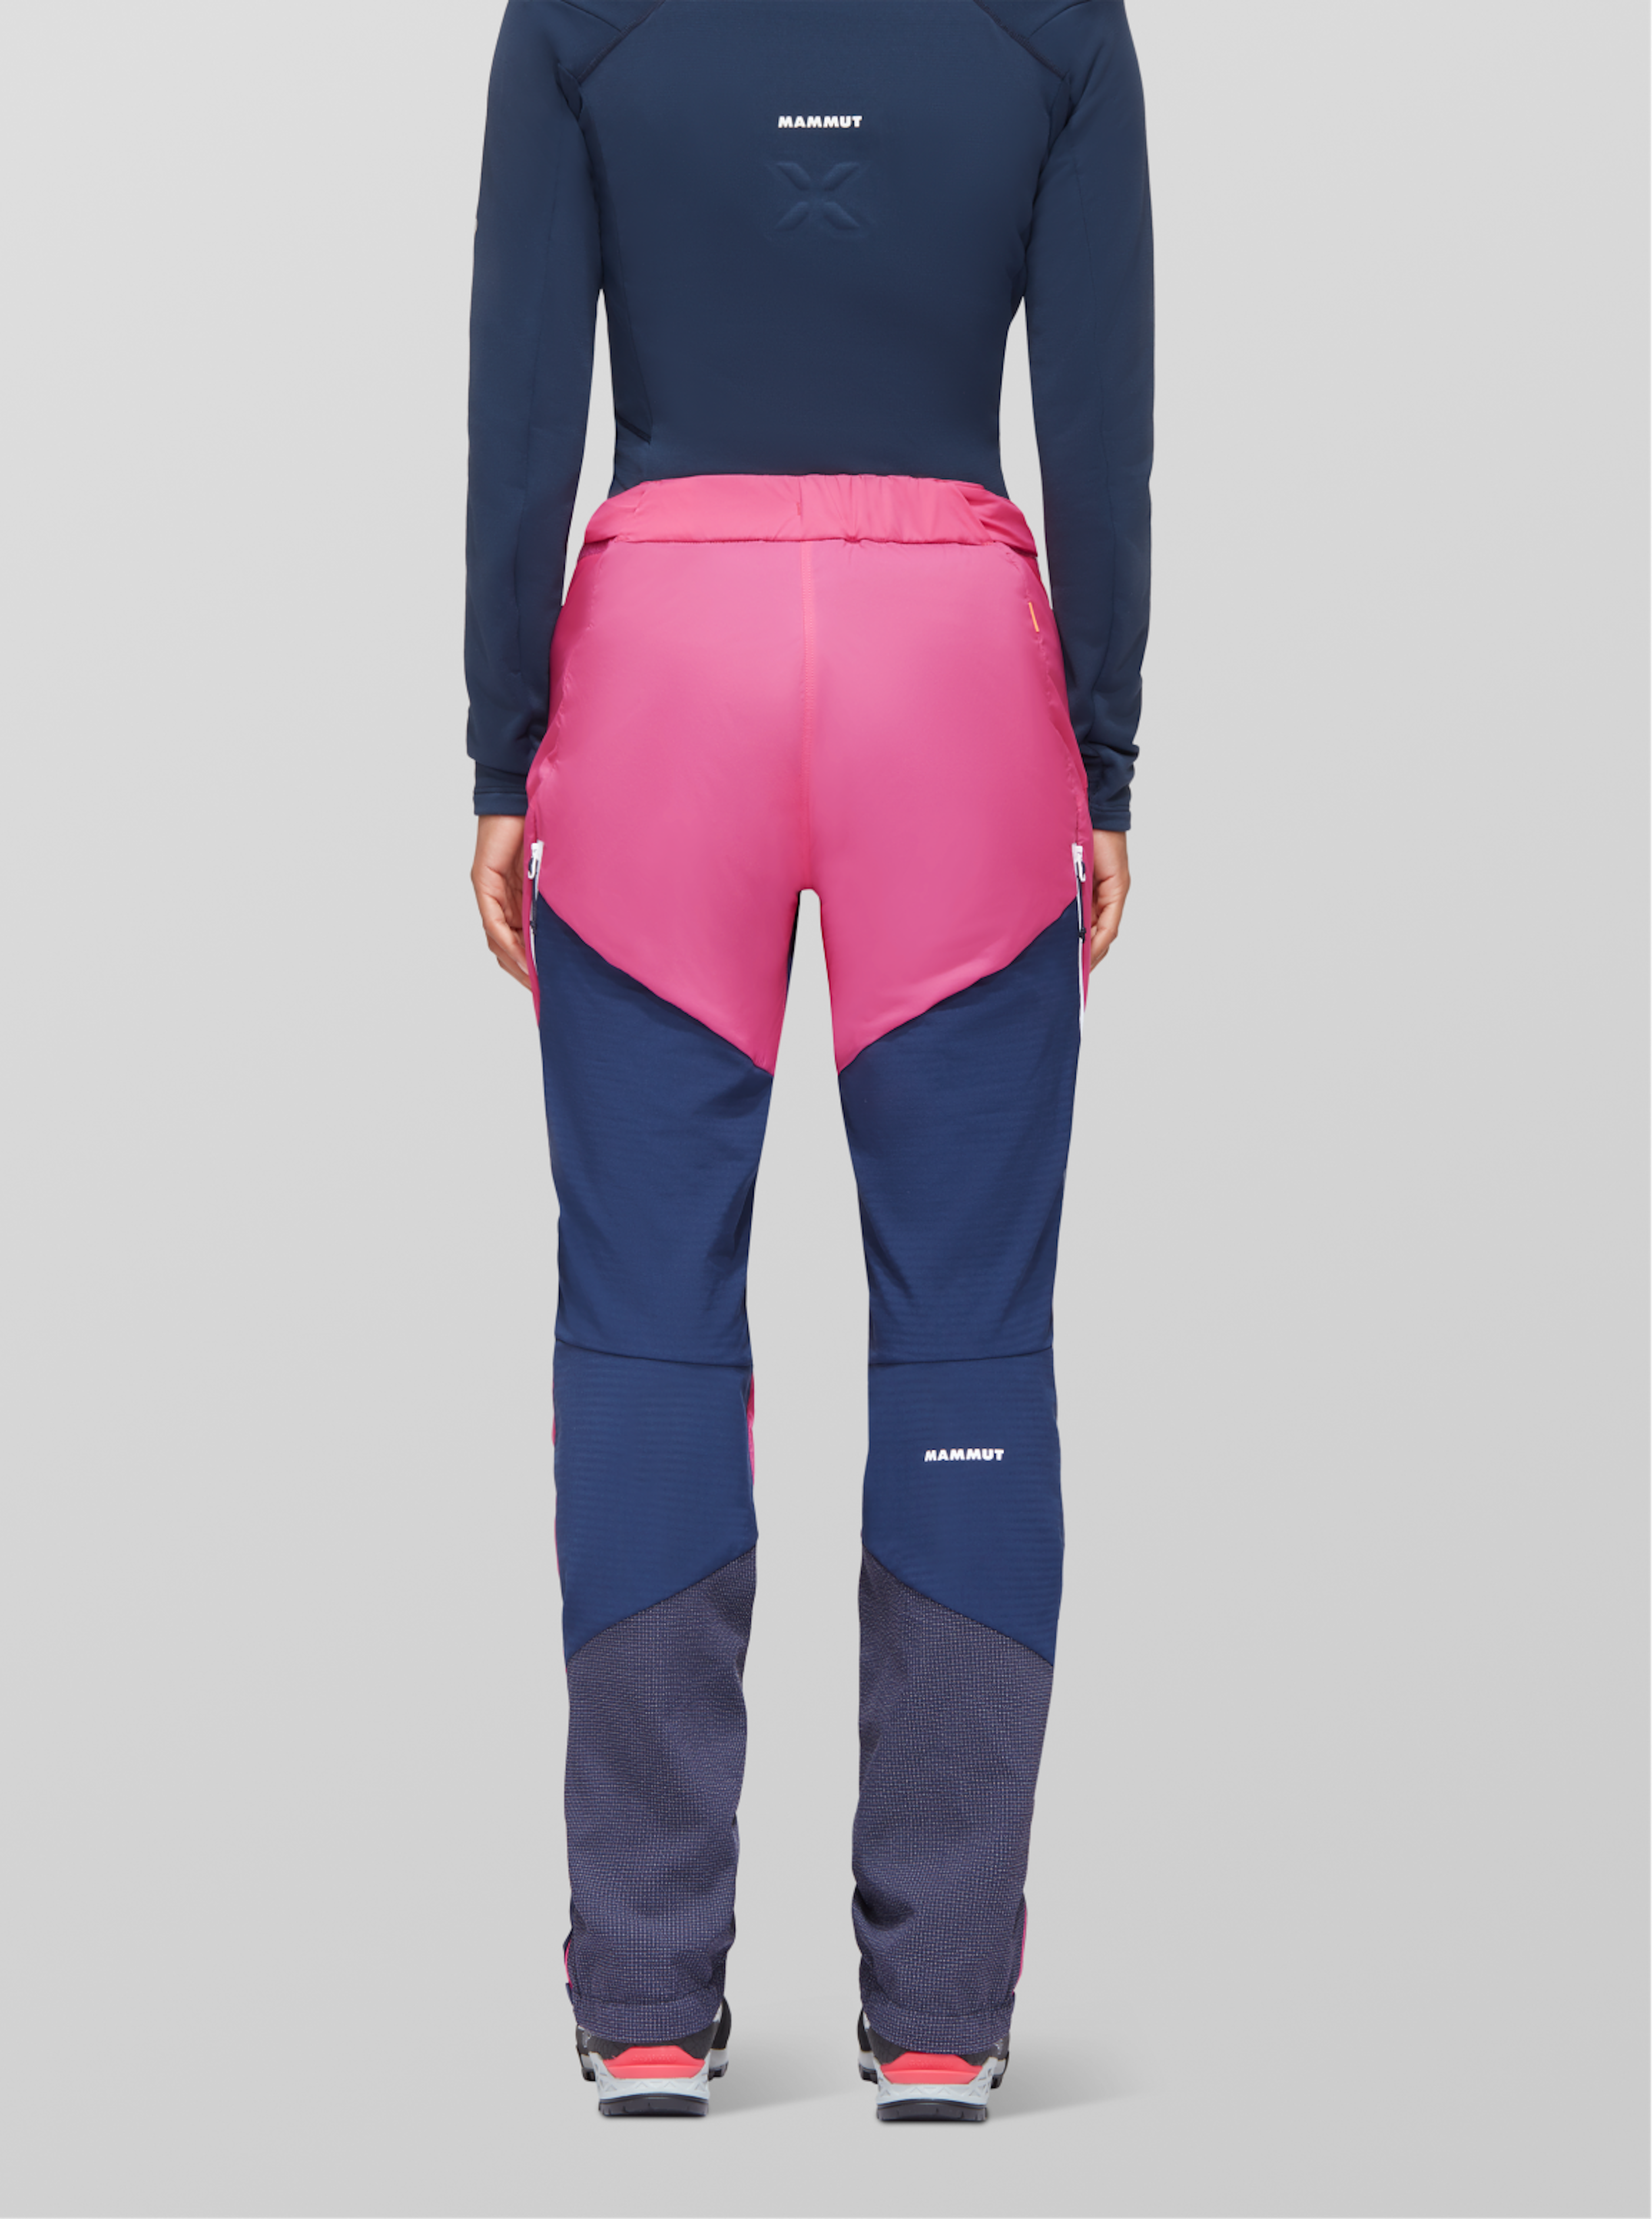 Pantalon Mammut pour femmes en bleu/rose